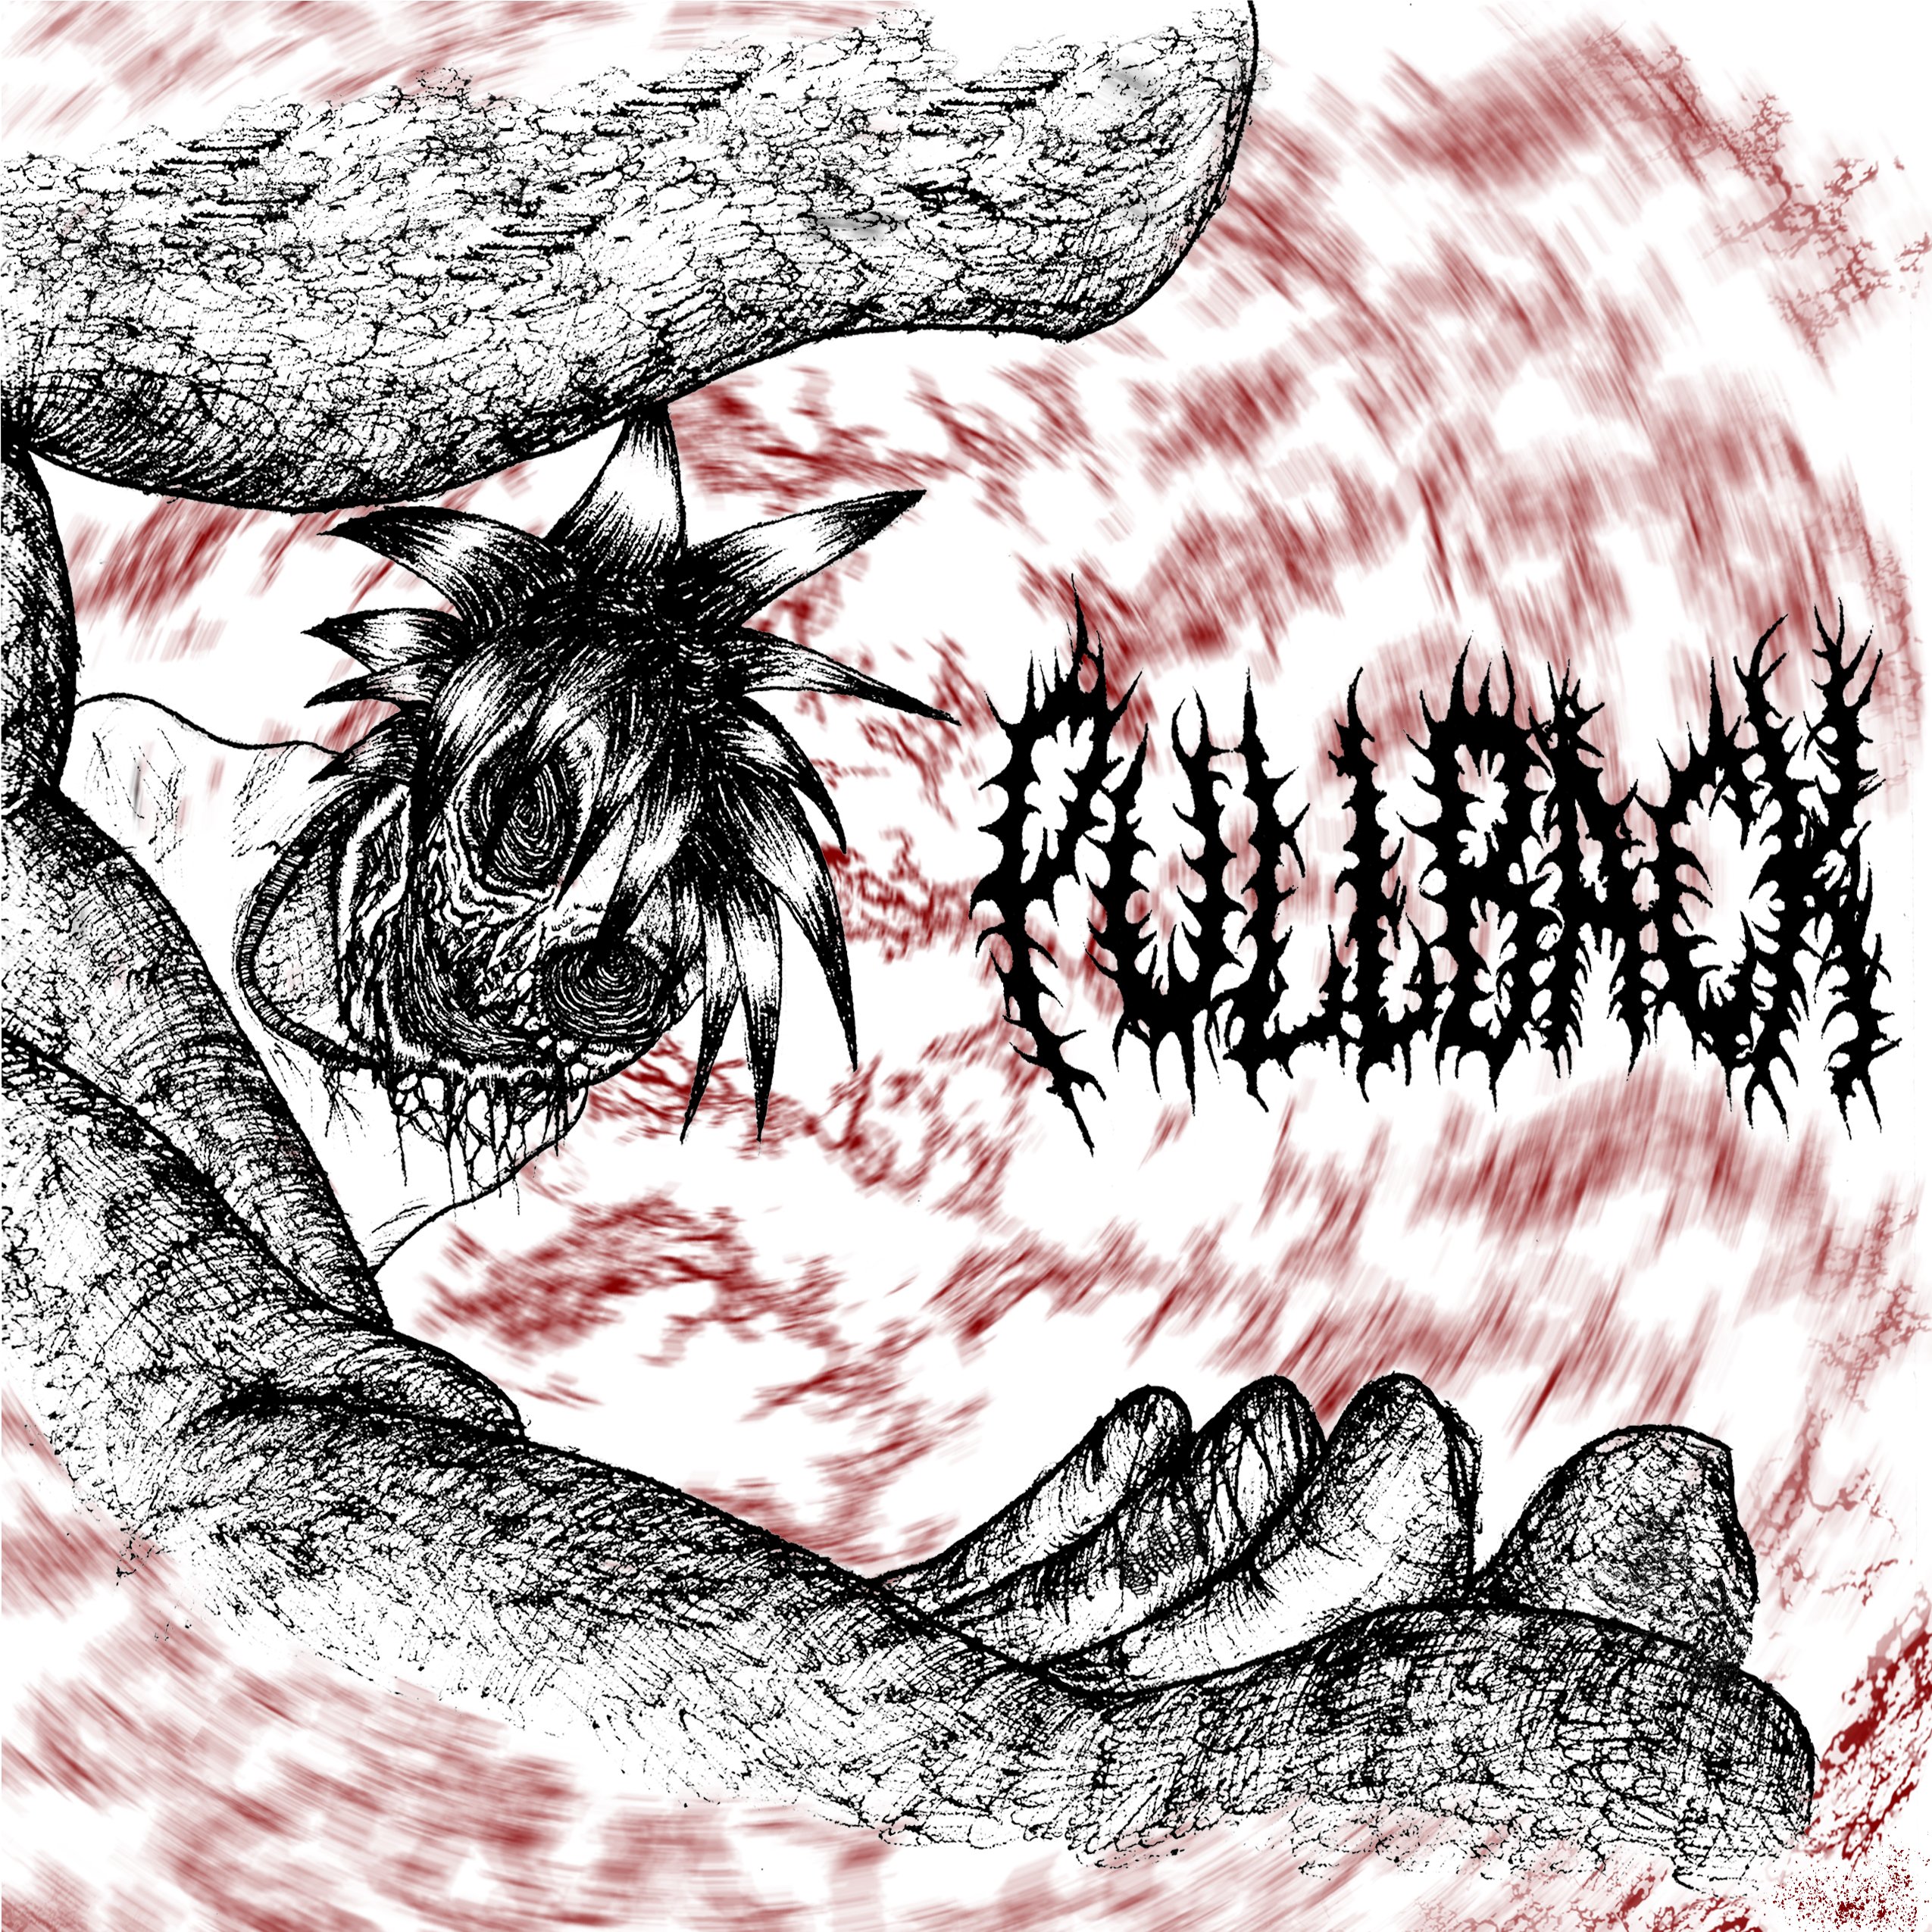 WHOKILLEDXIX PULLBACK cover artwork